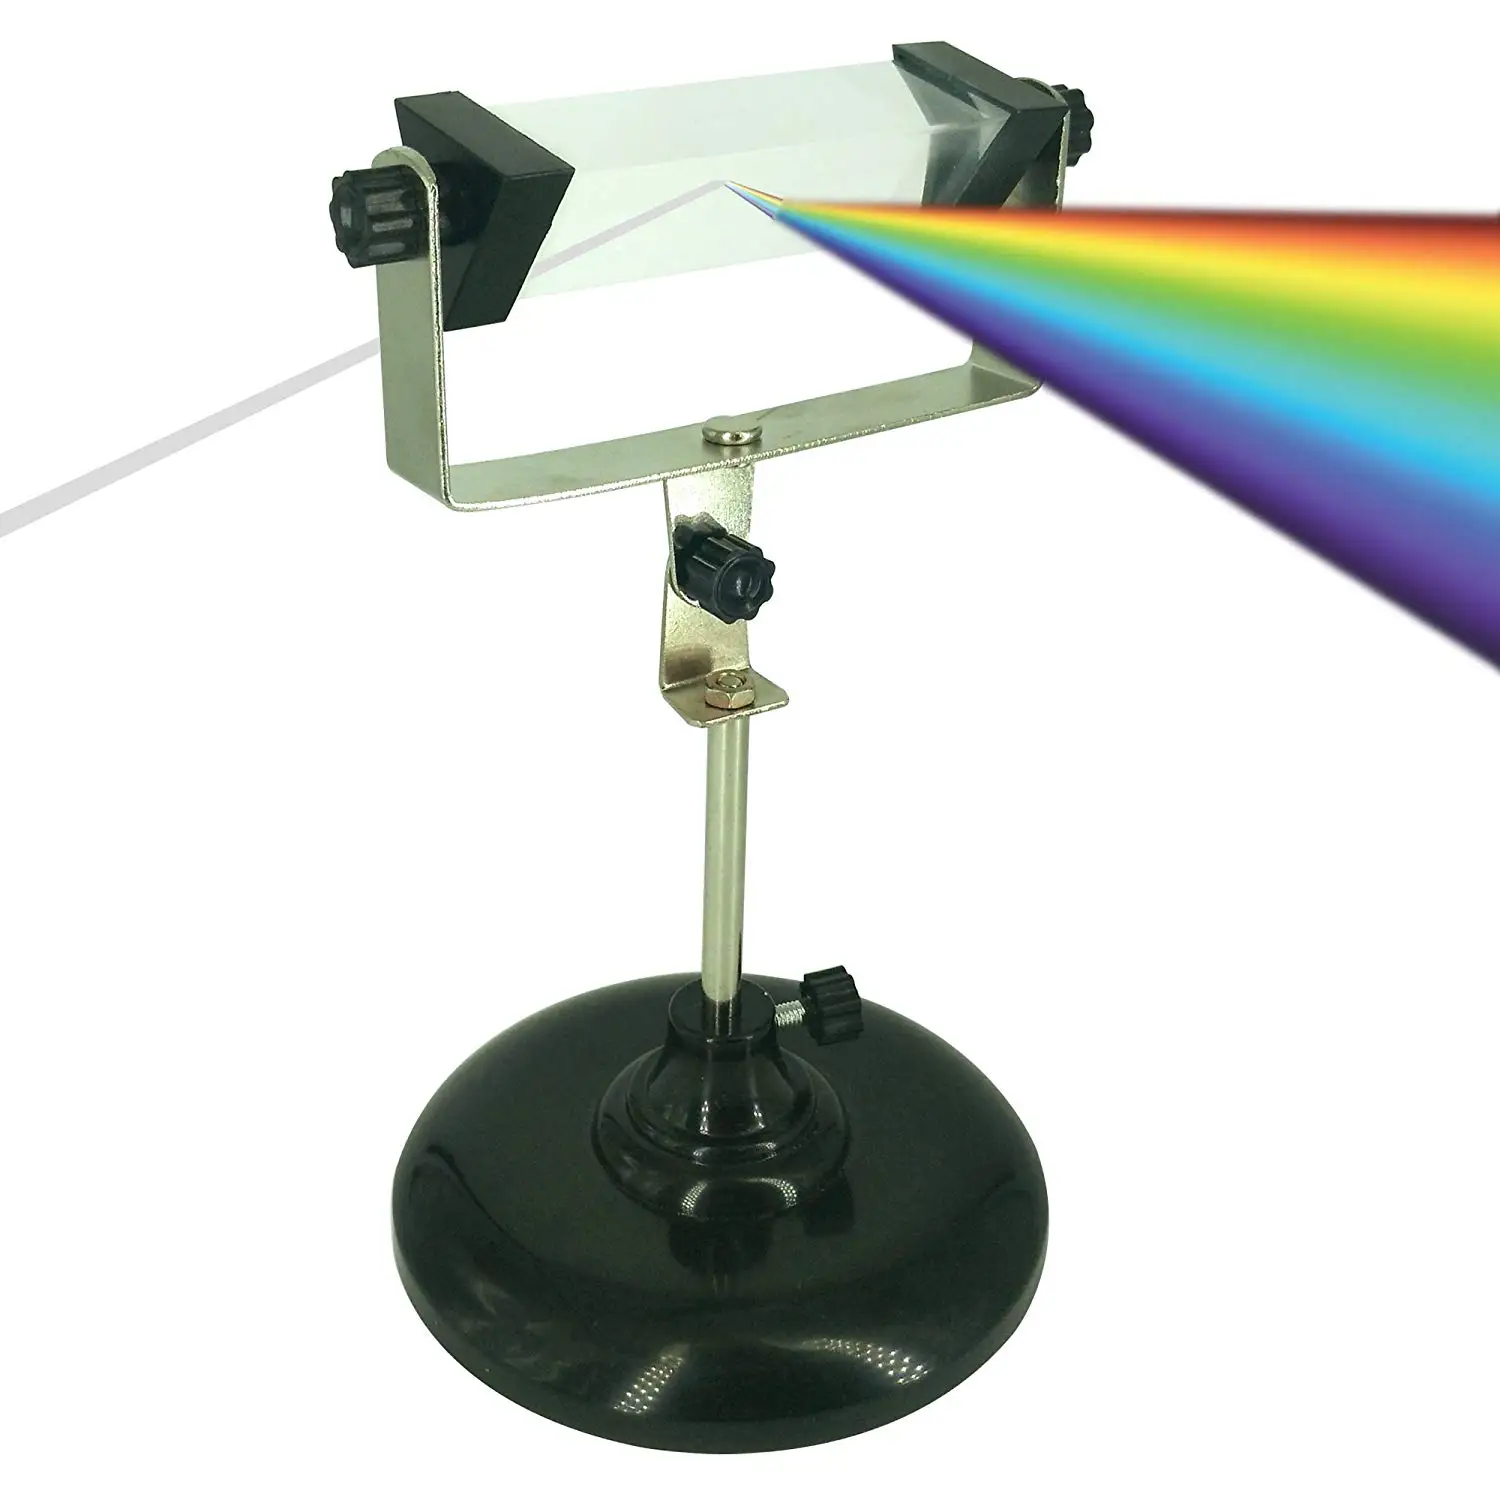 Optical Triangular Prism,Optical Glass Triangular Prism with Stand Physics Light Spectrum Teaching Tool 